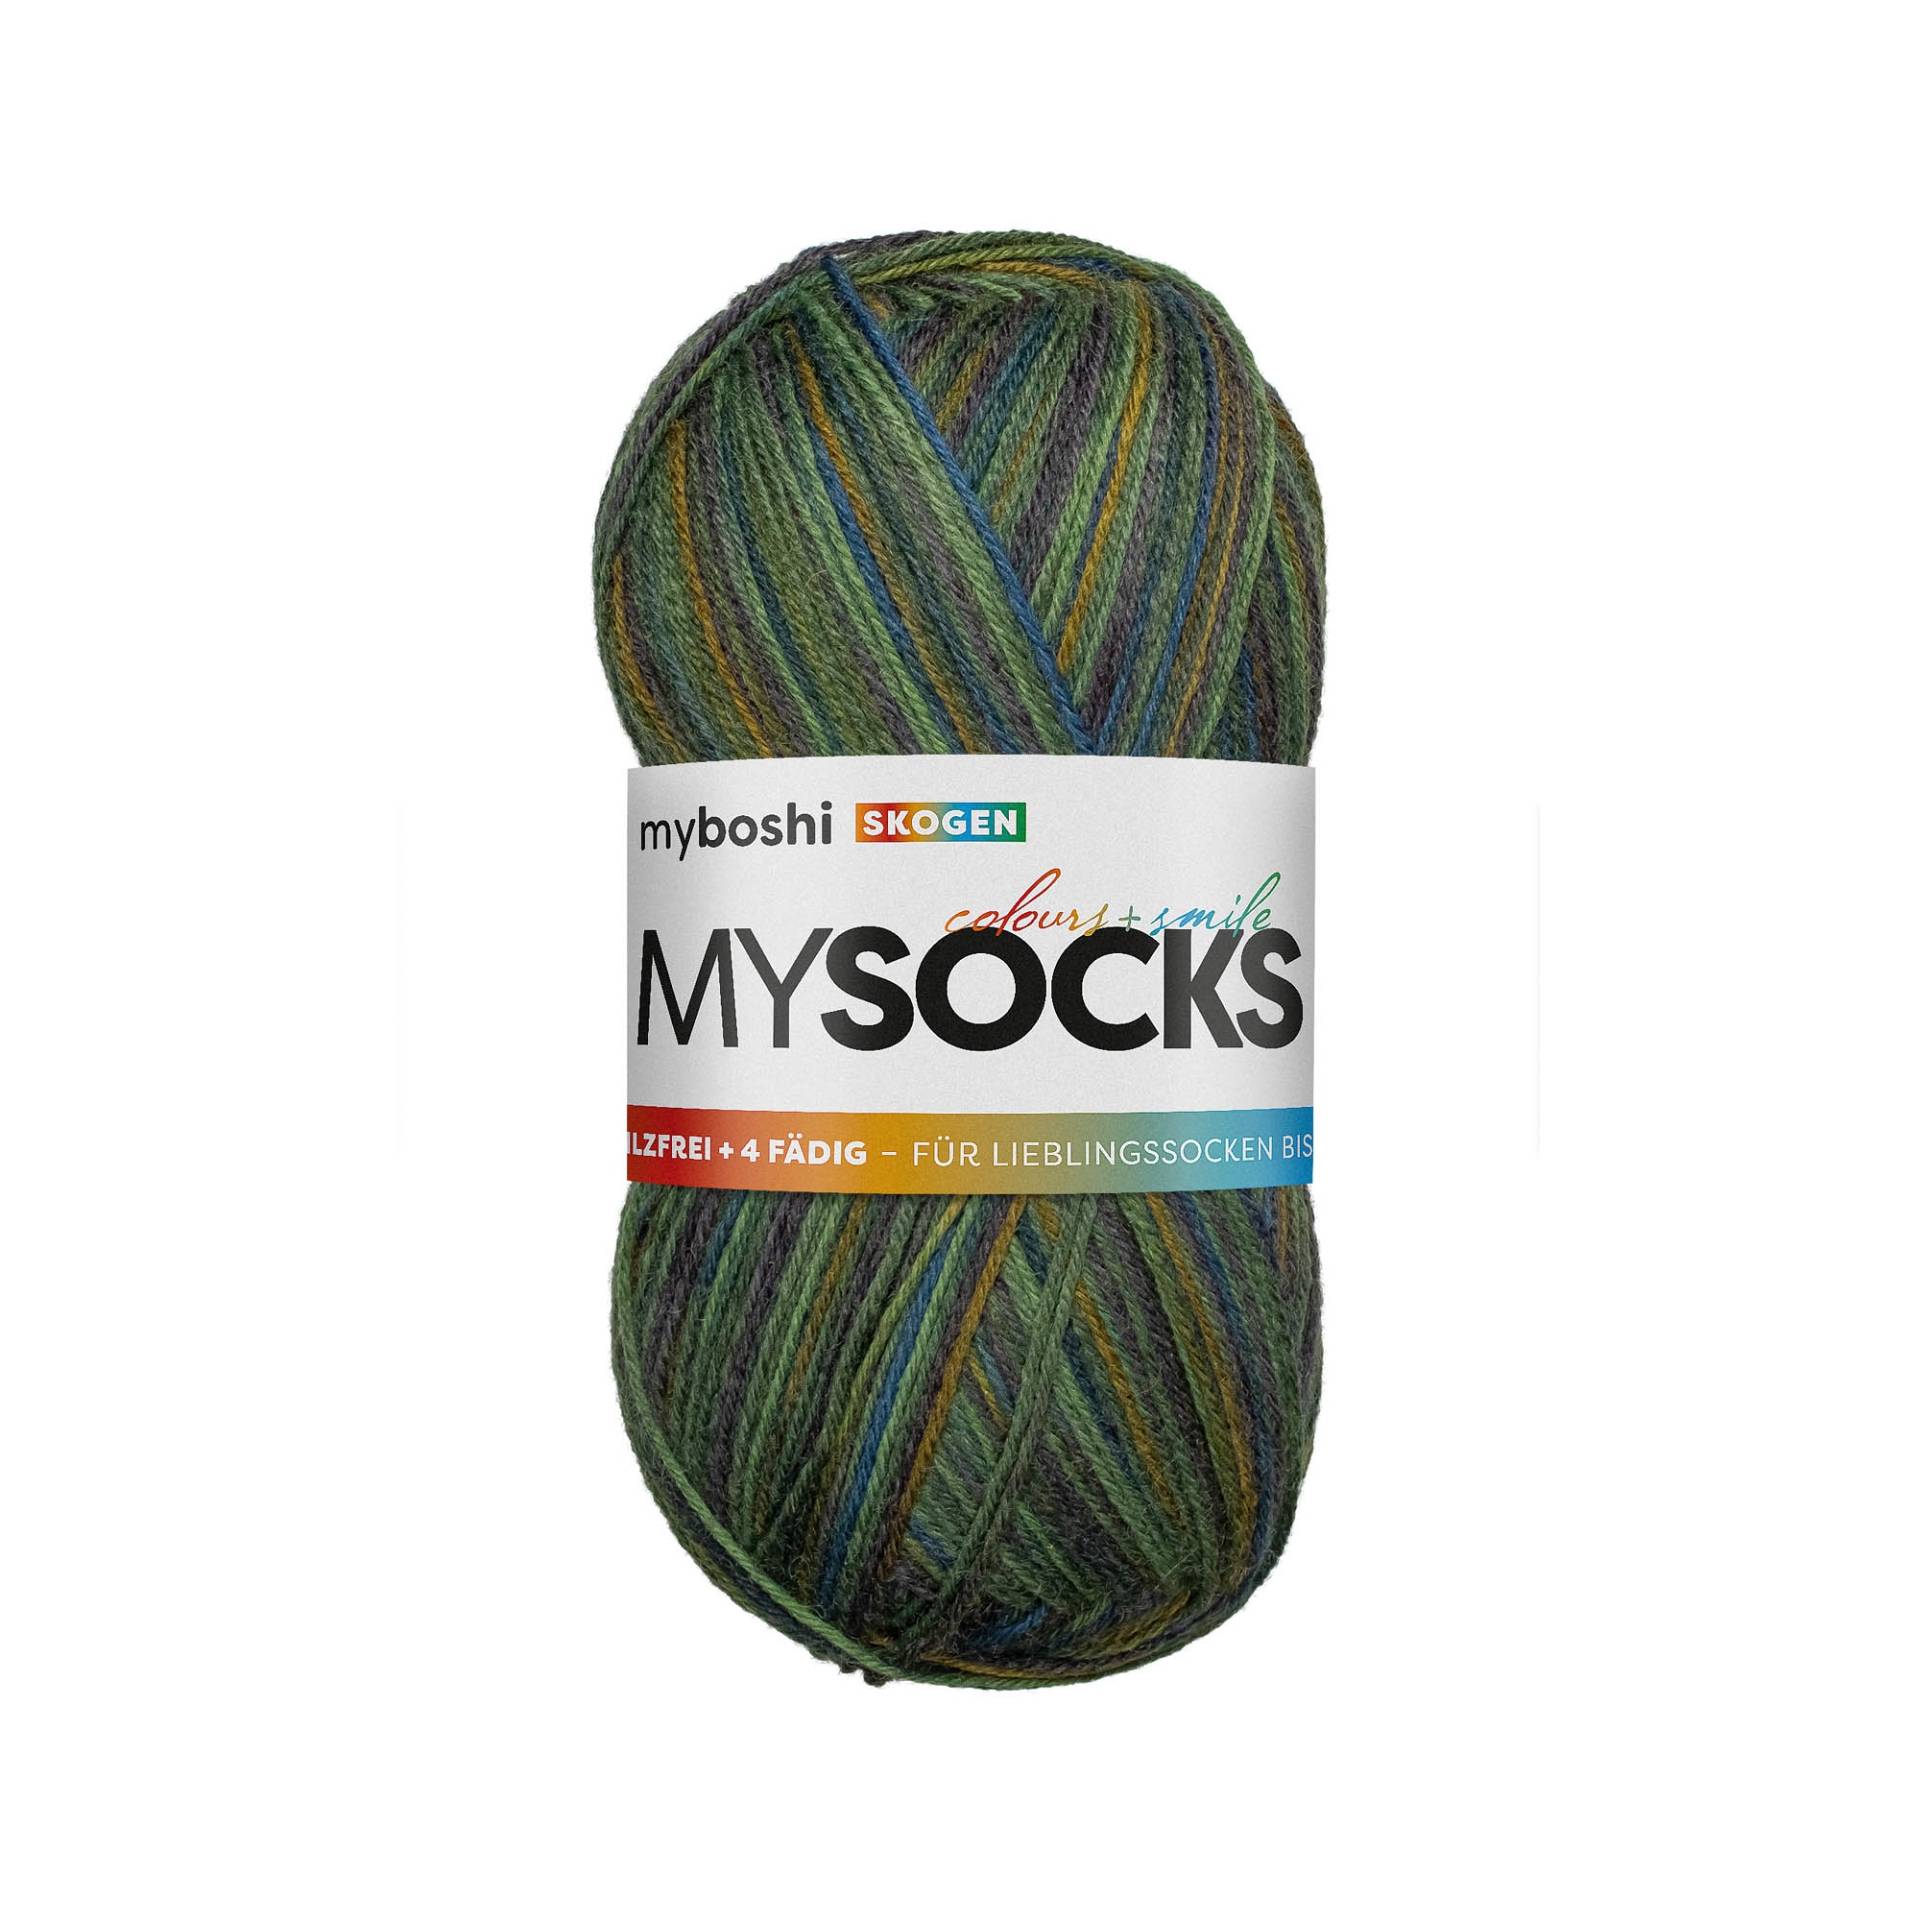 myboshi mysocks 4-fädige Sockenwolle Skogen 100g, grün-blau von Stoffe Hemmers